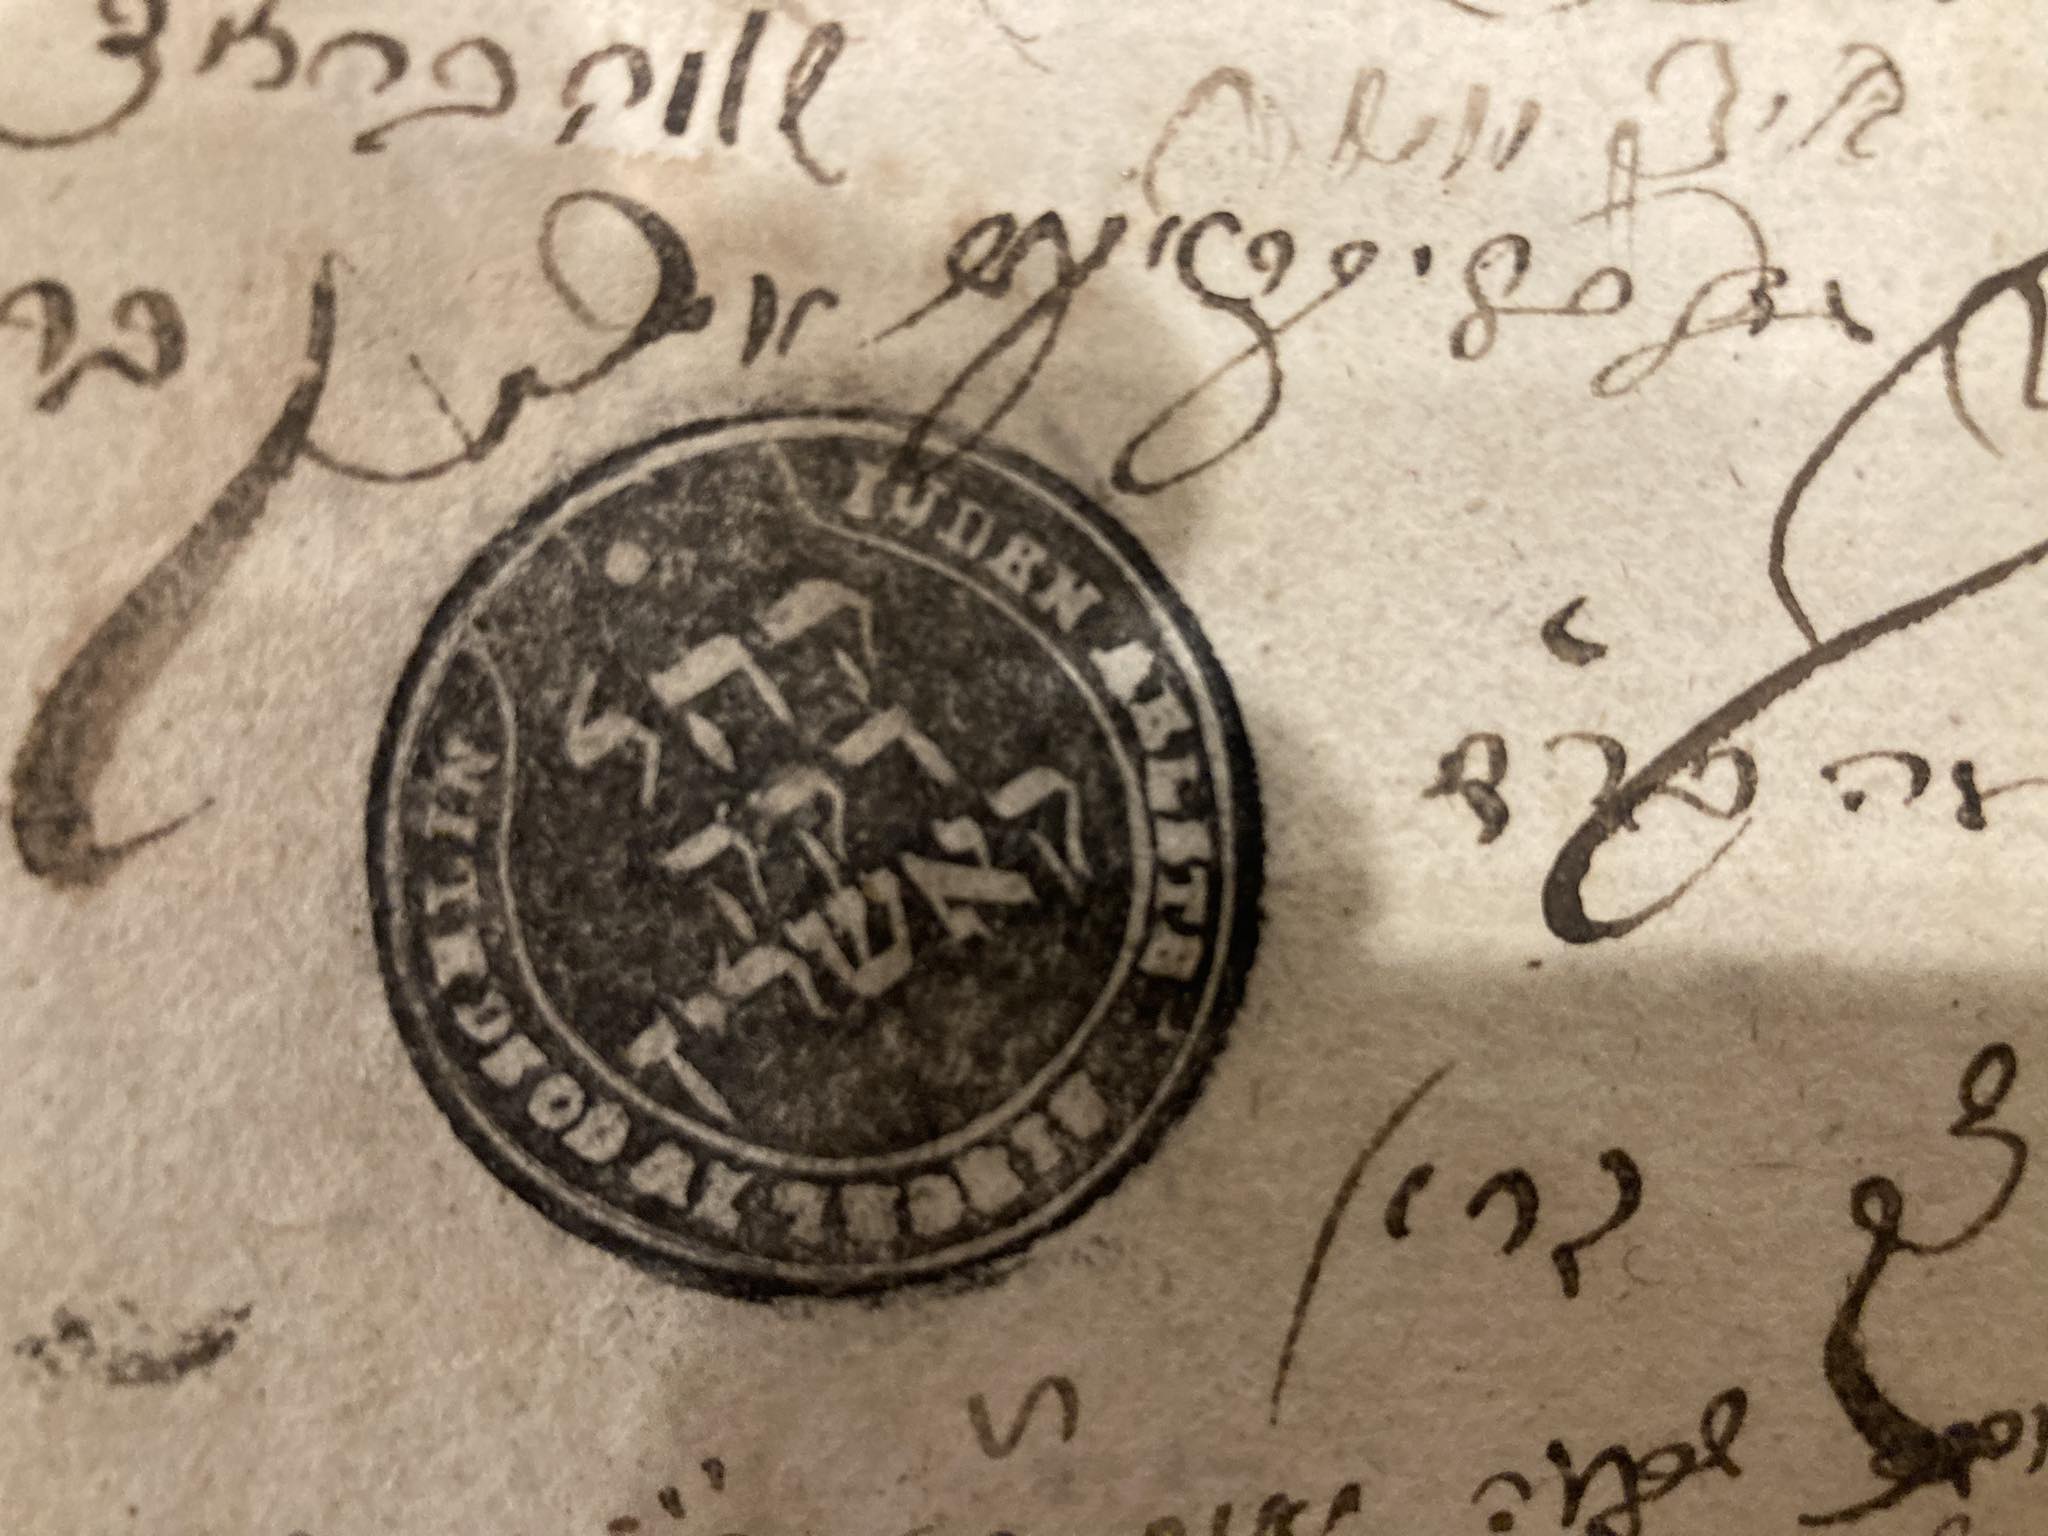 Pinkas - a manuscript from 1833 containing records of the history of the Jewish community in Murowana Goślina